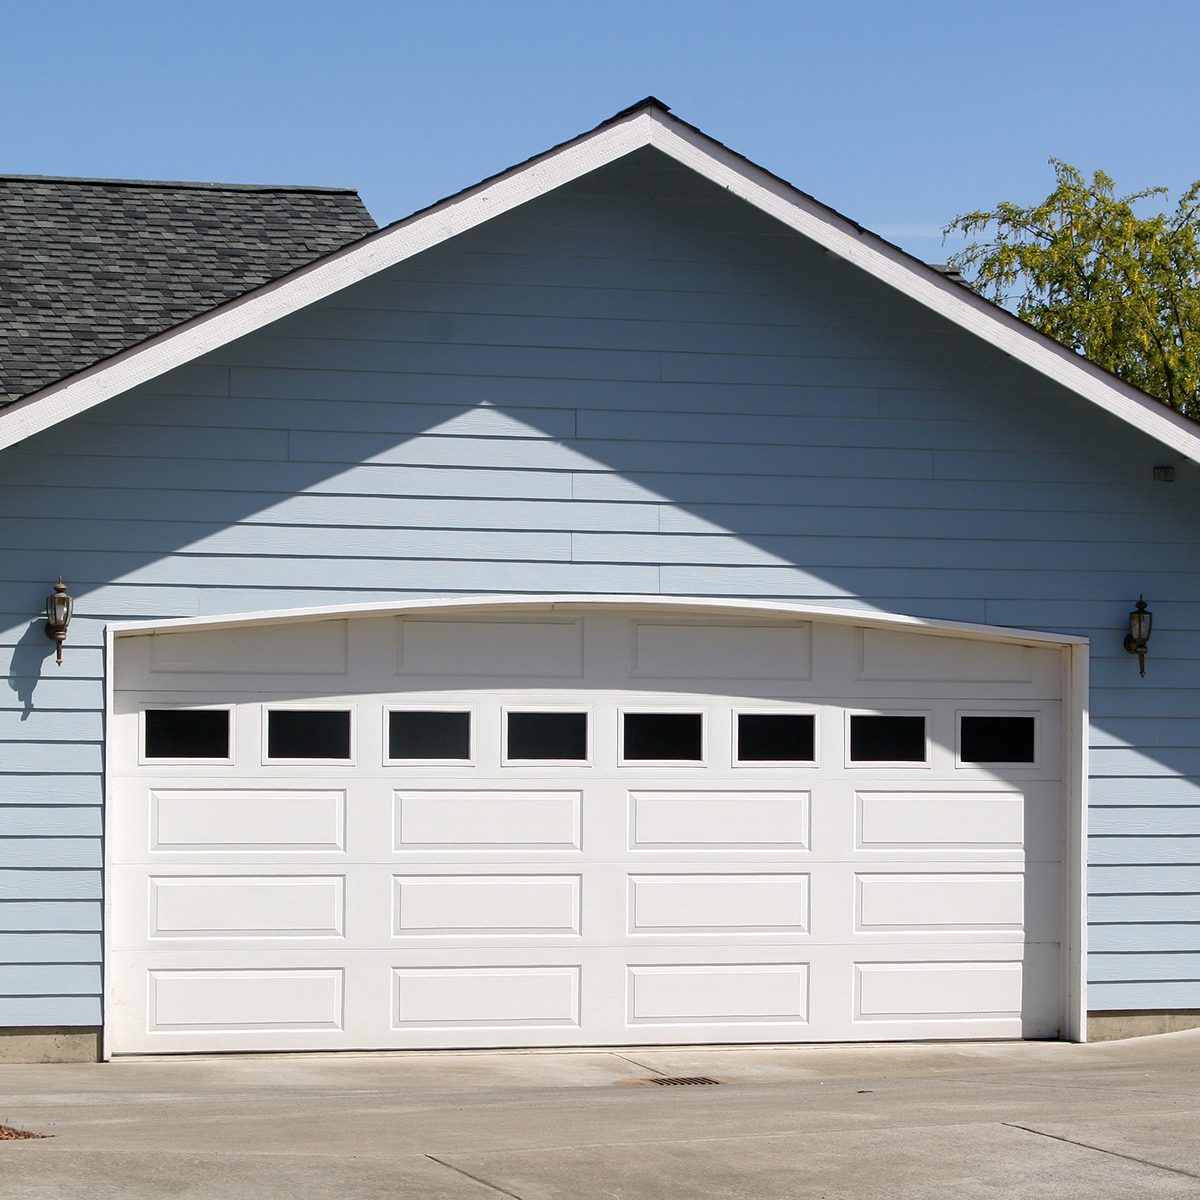 7 Types of Garage Doors To Know